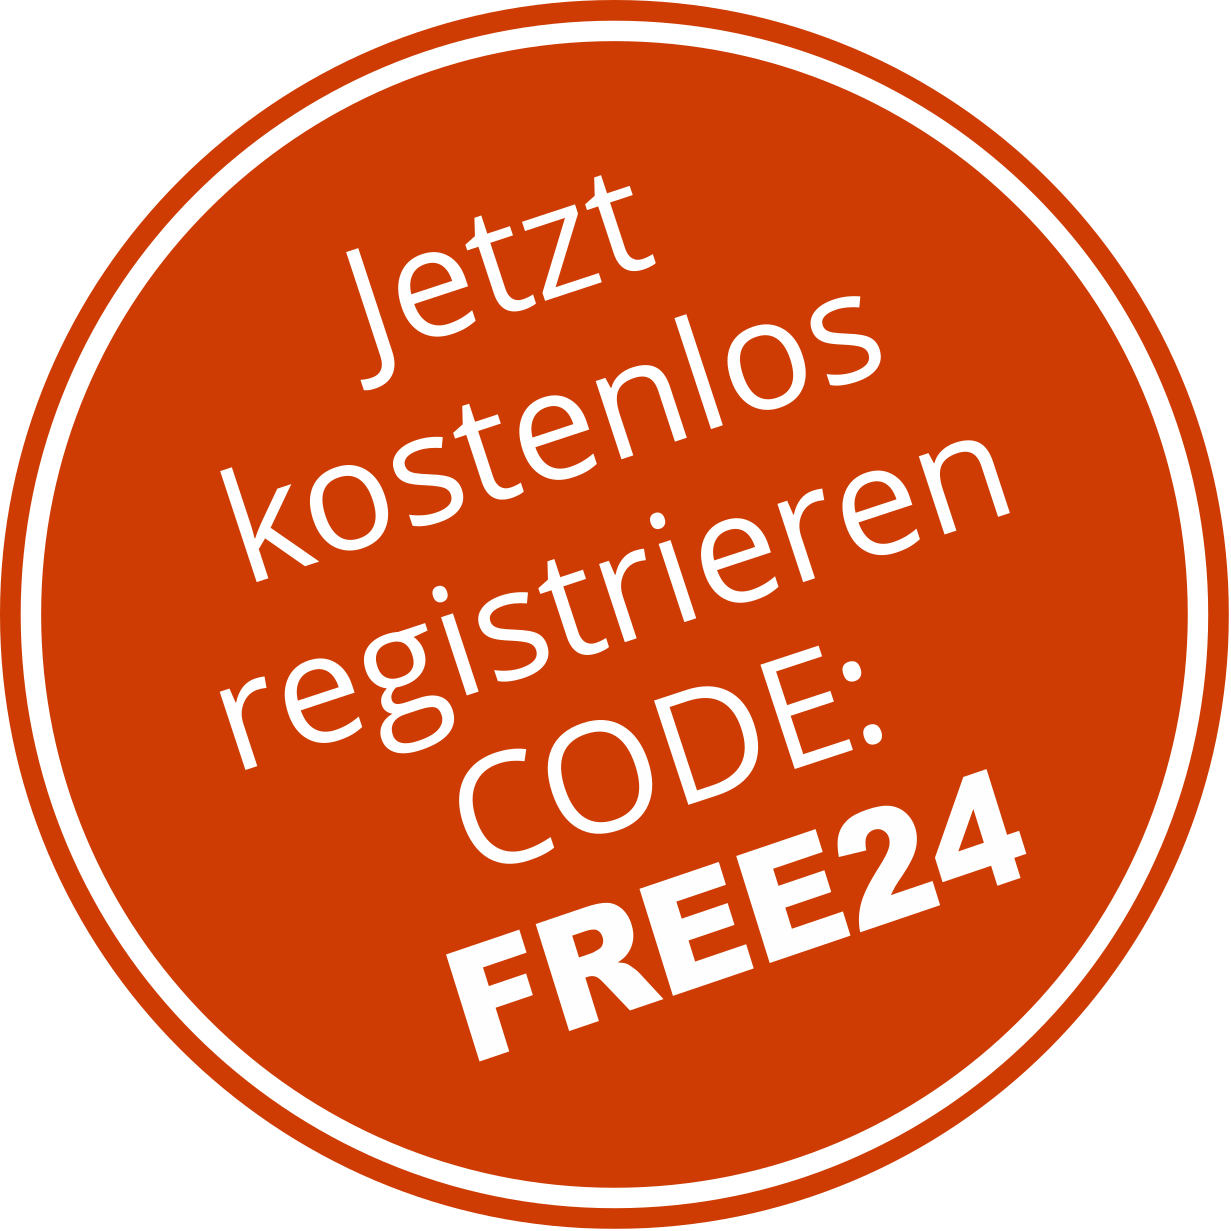 free code icon